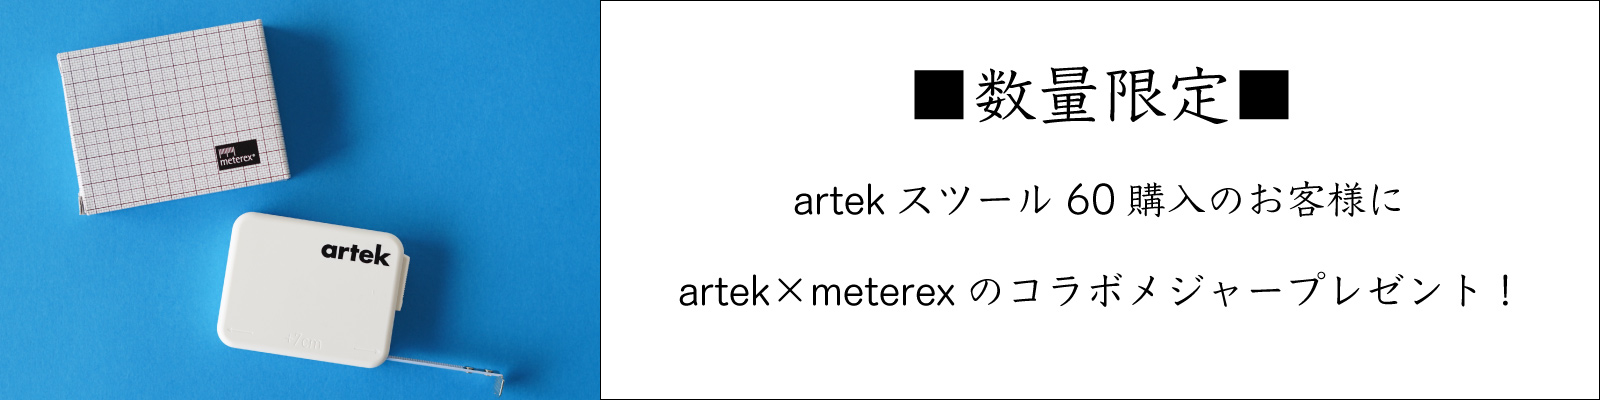 artek (アルテック)  3本脚 スツール stool60 プレゼント